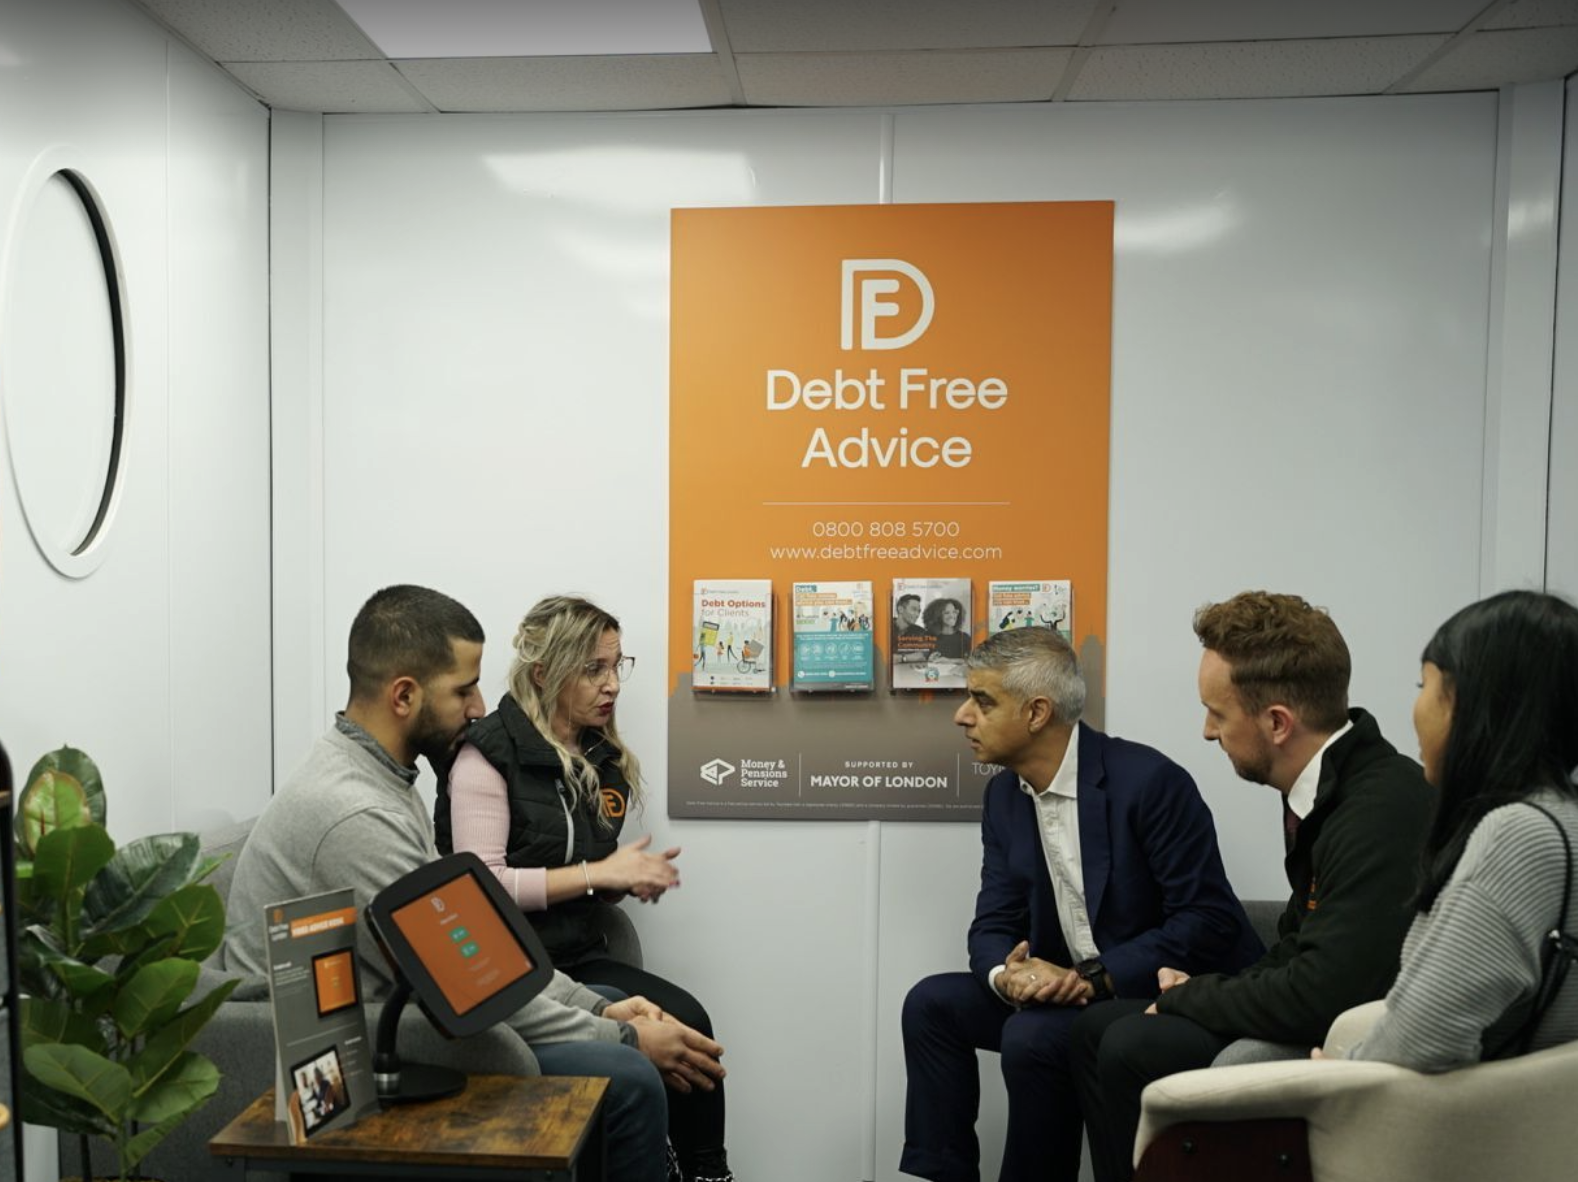 Debt Free Advice Kiosk, with the mayor of London